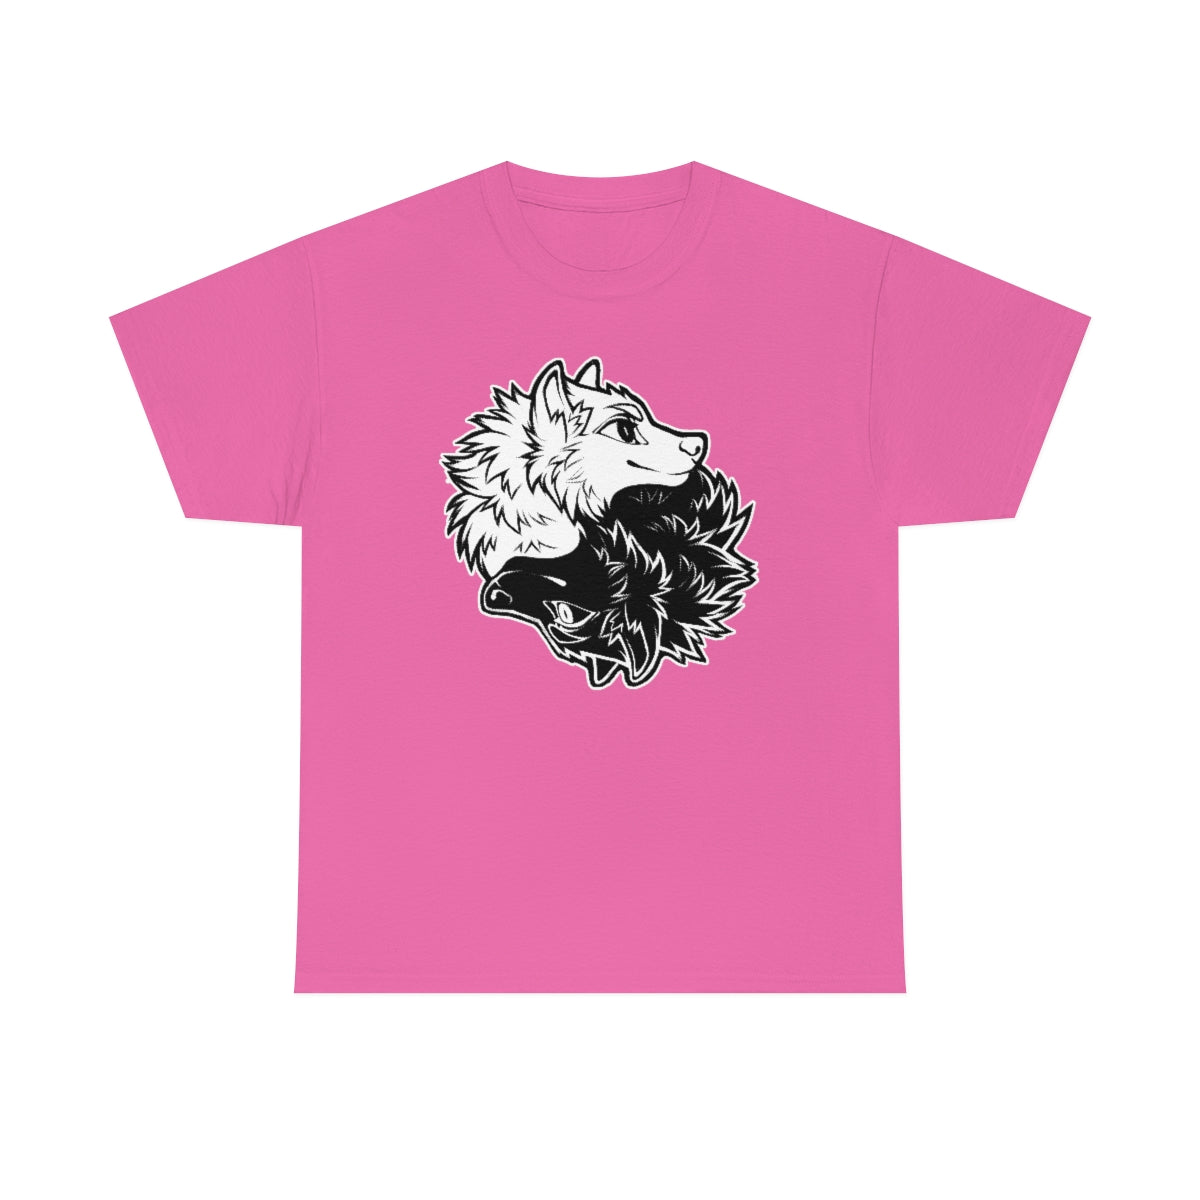 Ying Yang Wolves - T-Shirt T-Shirt Artworktee Pink S 